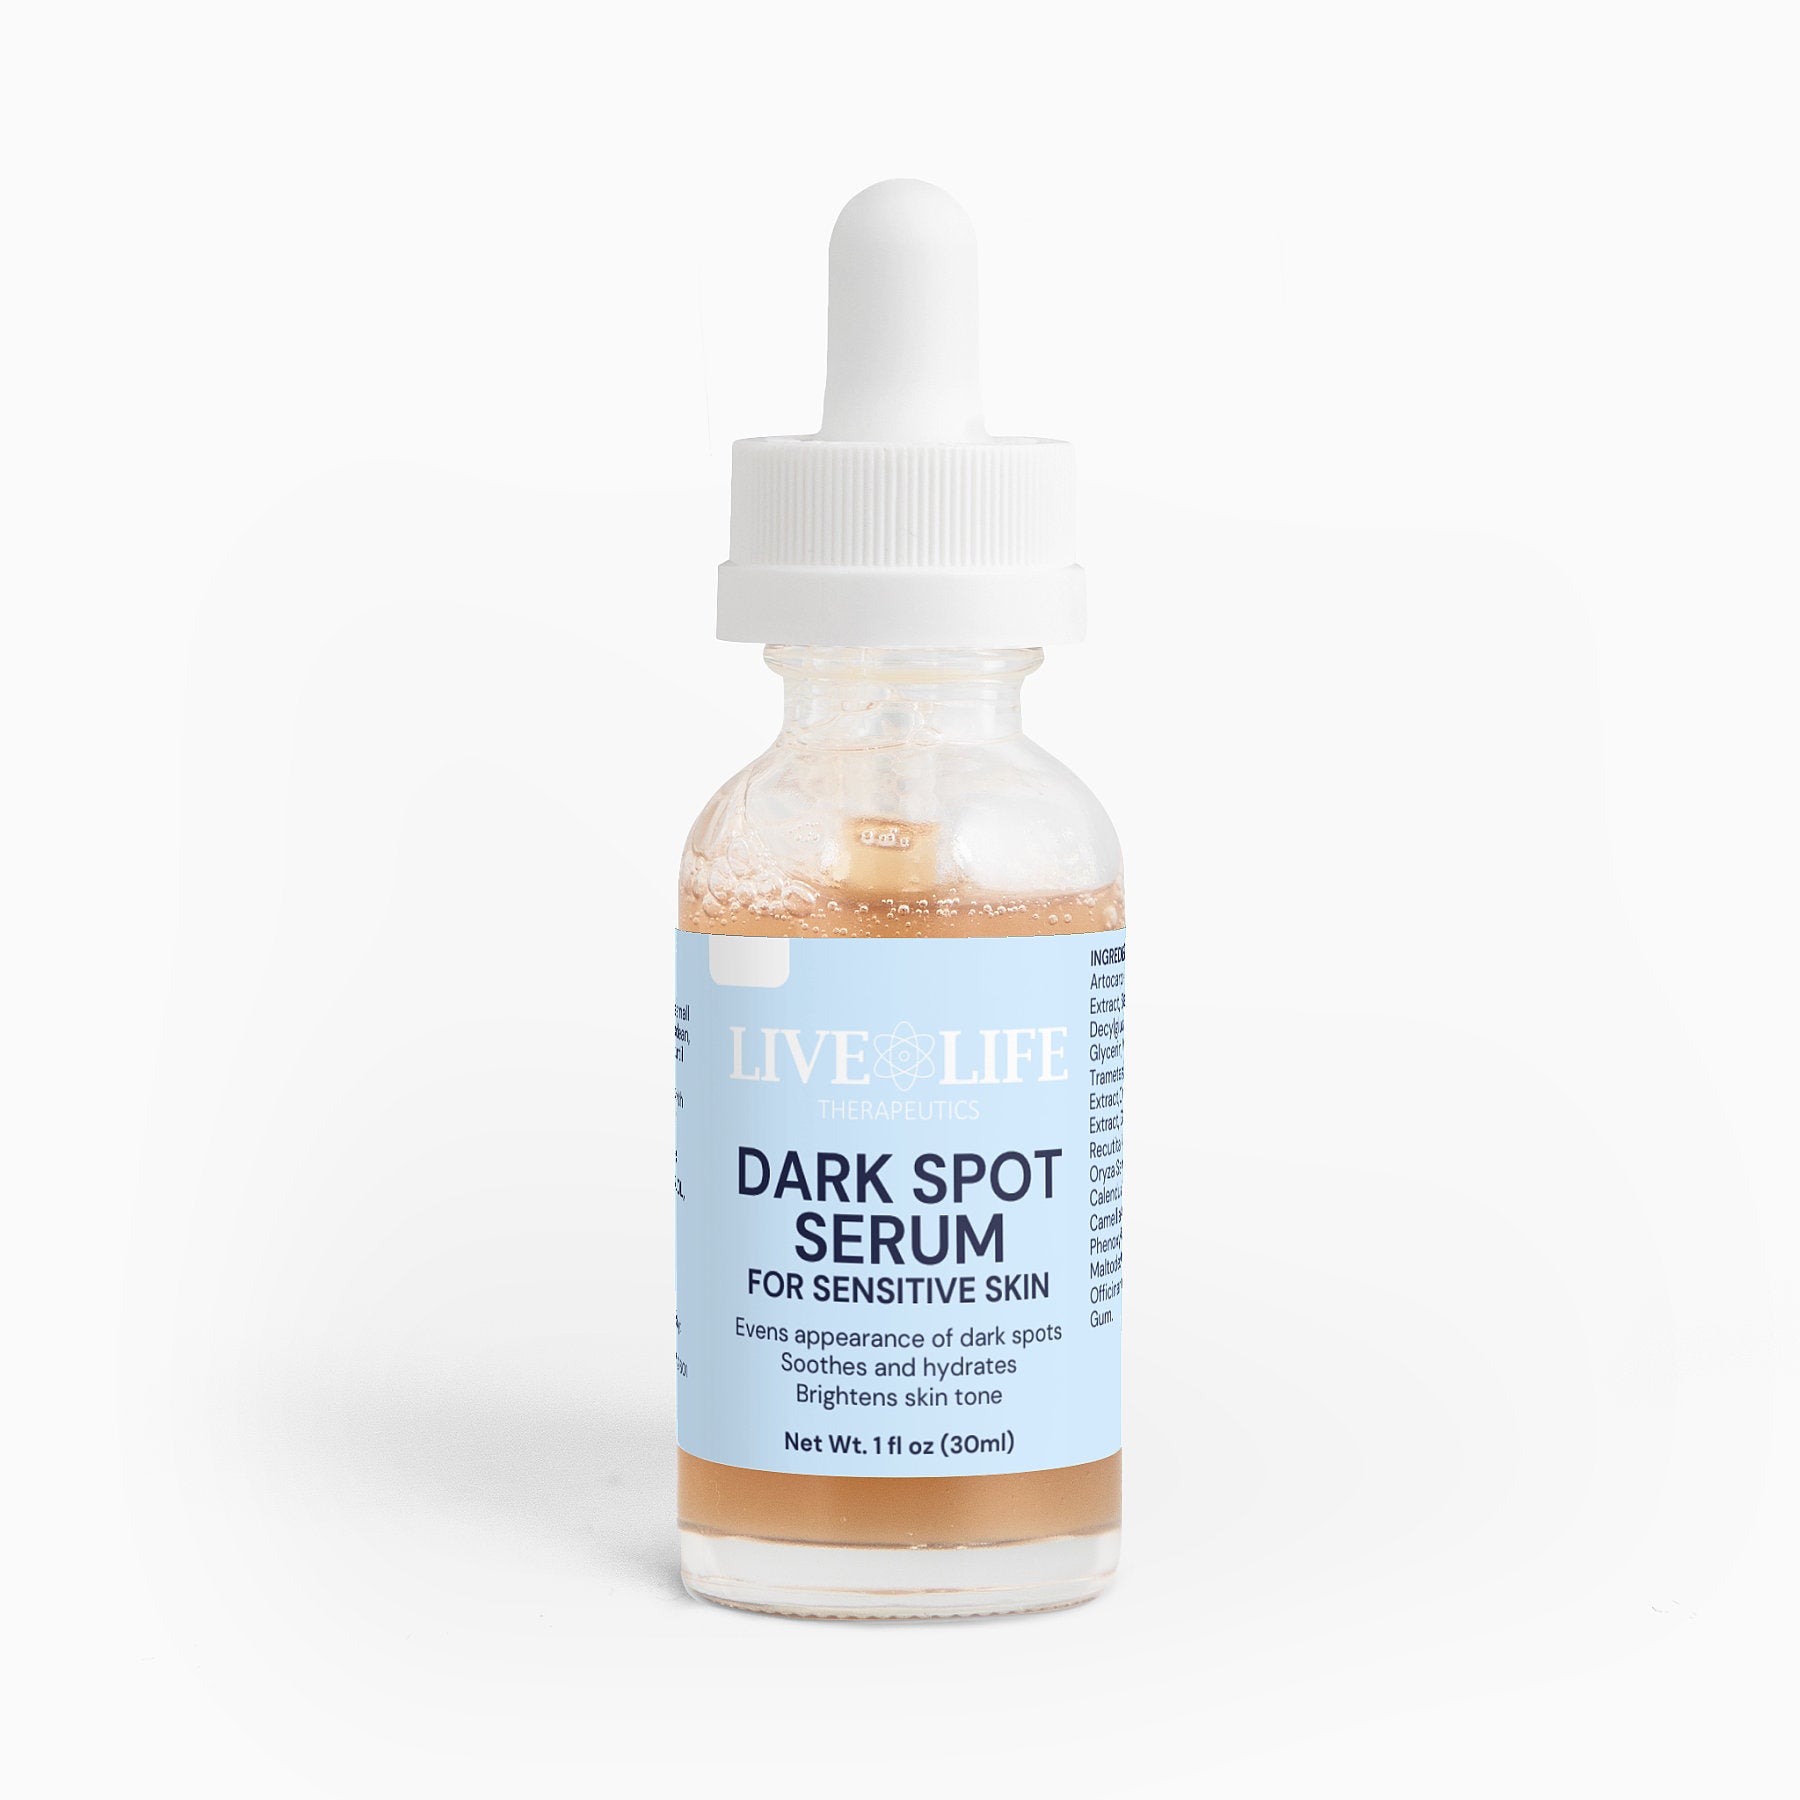 Dark Spot Serum for Sensitive Skin